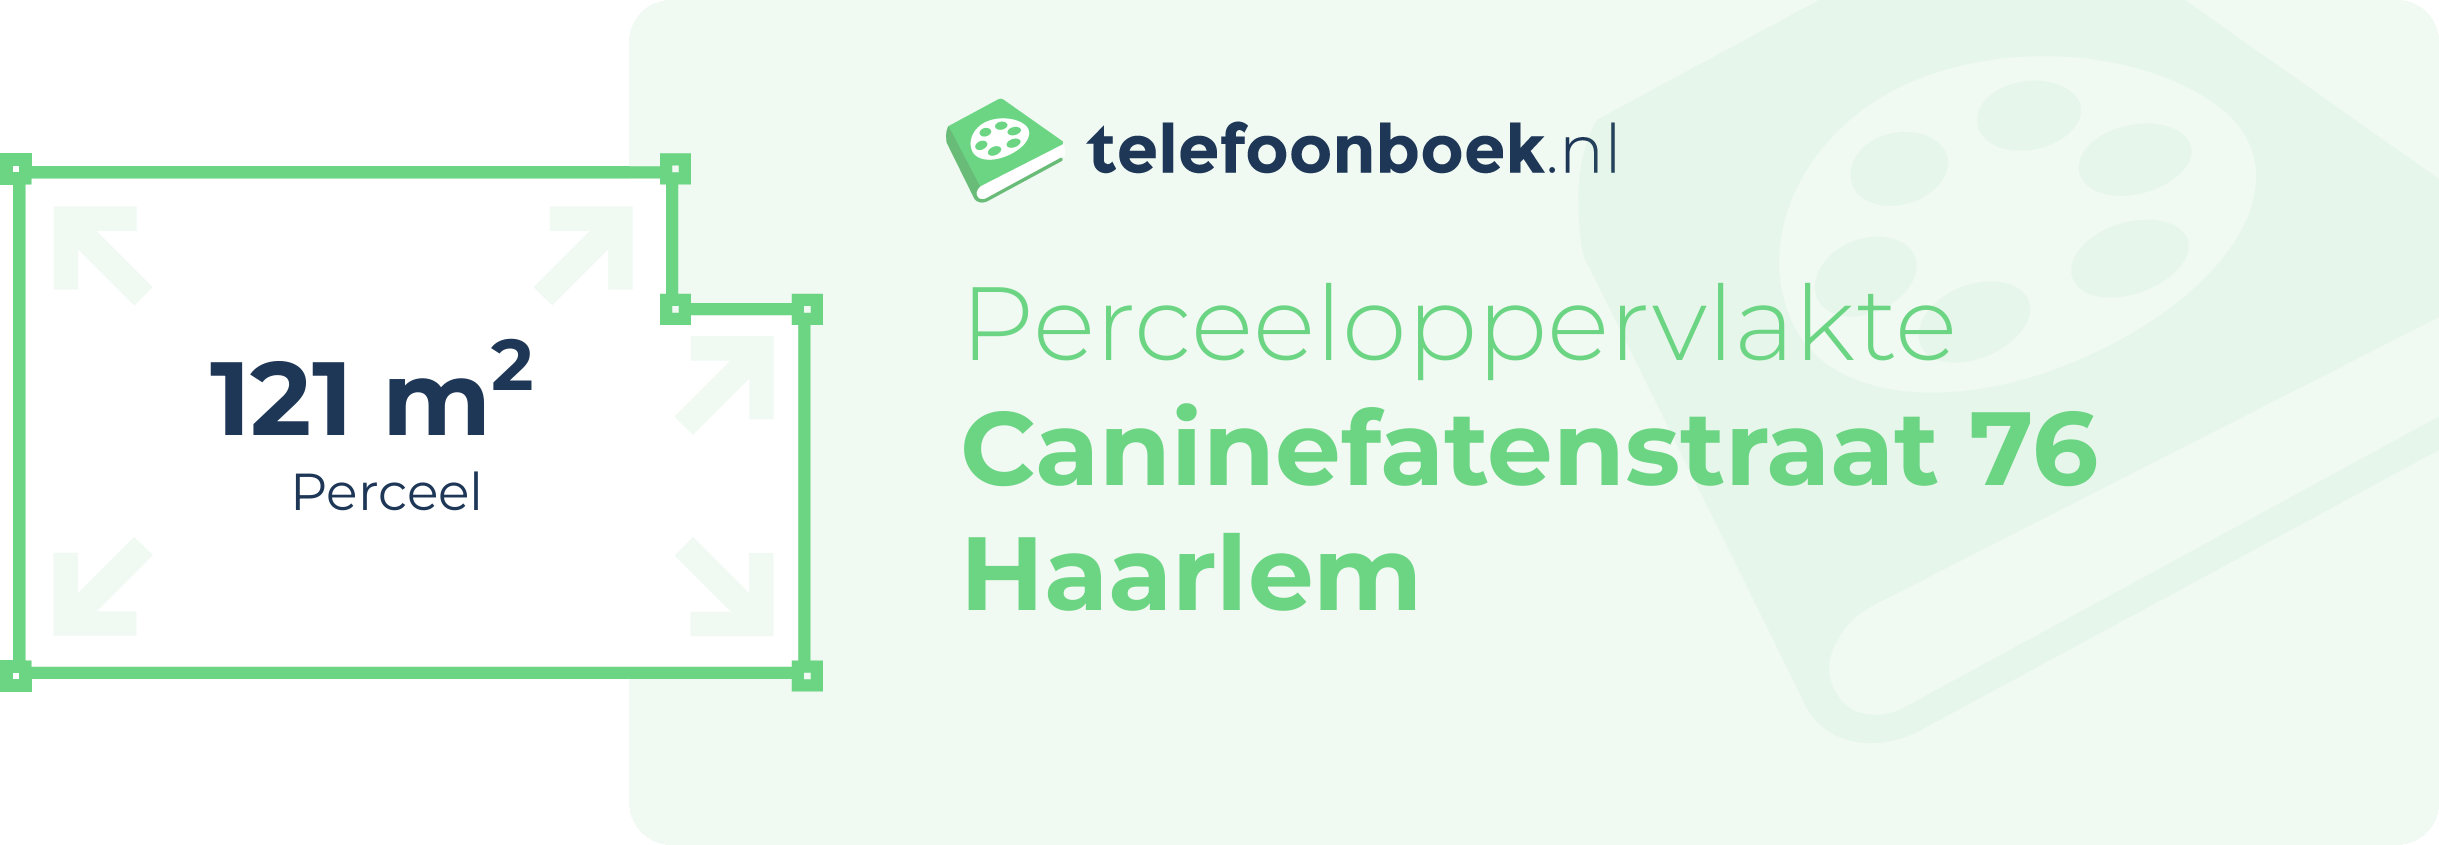 Perceeloppervlakte Caninefatenstraat 76 Haarlem